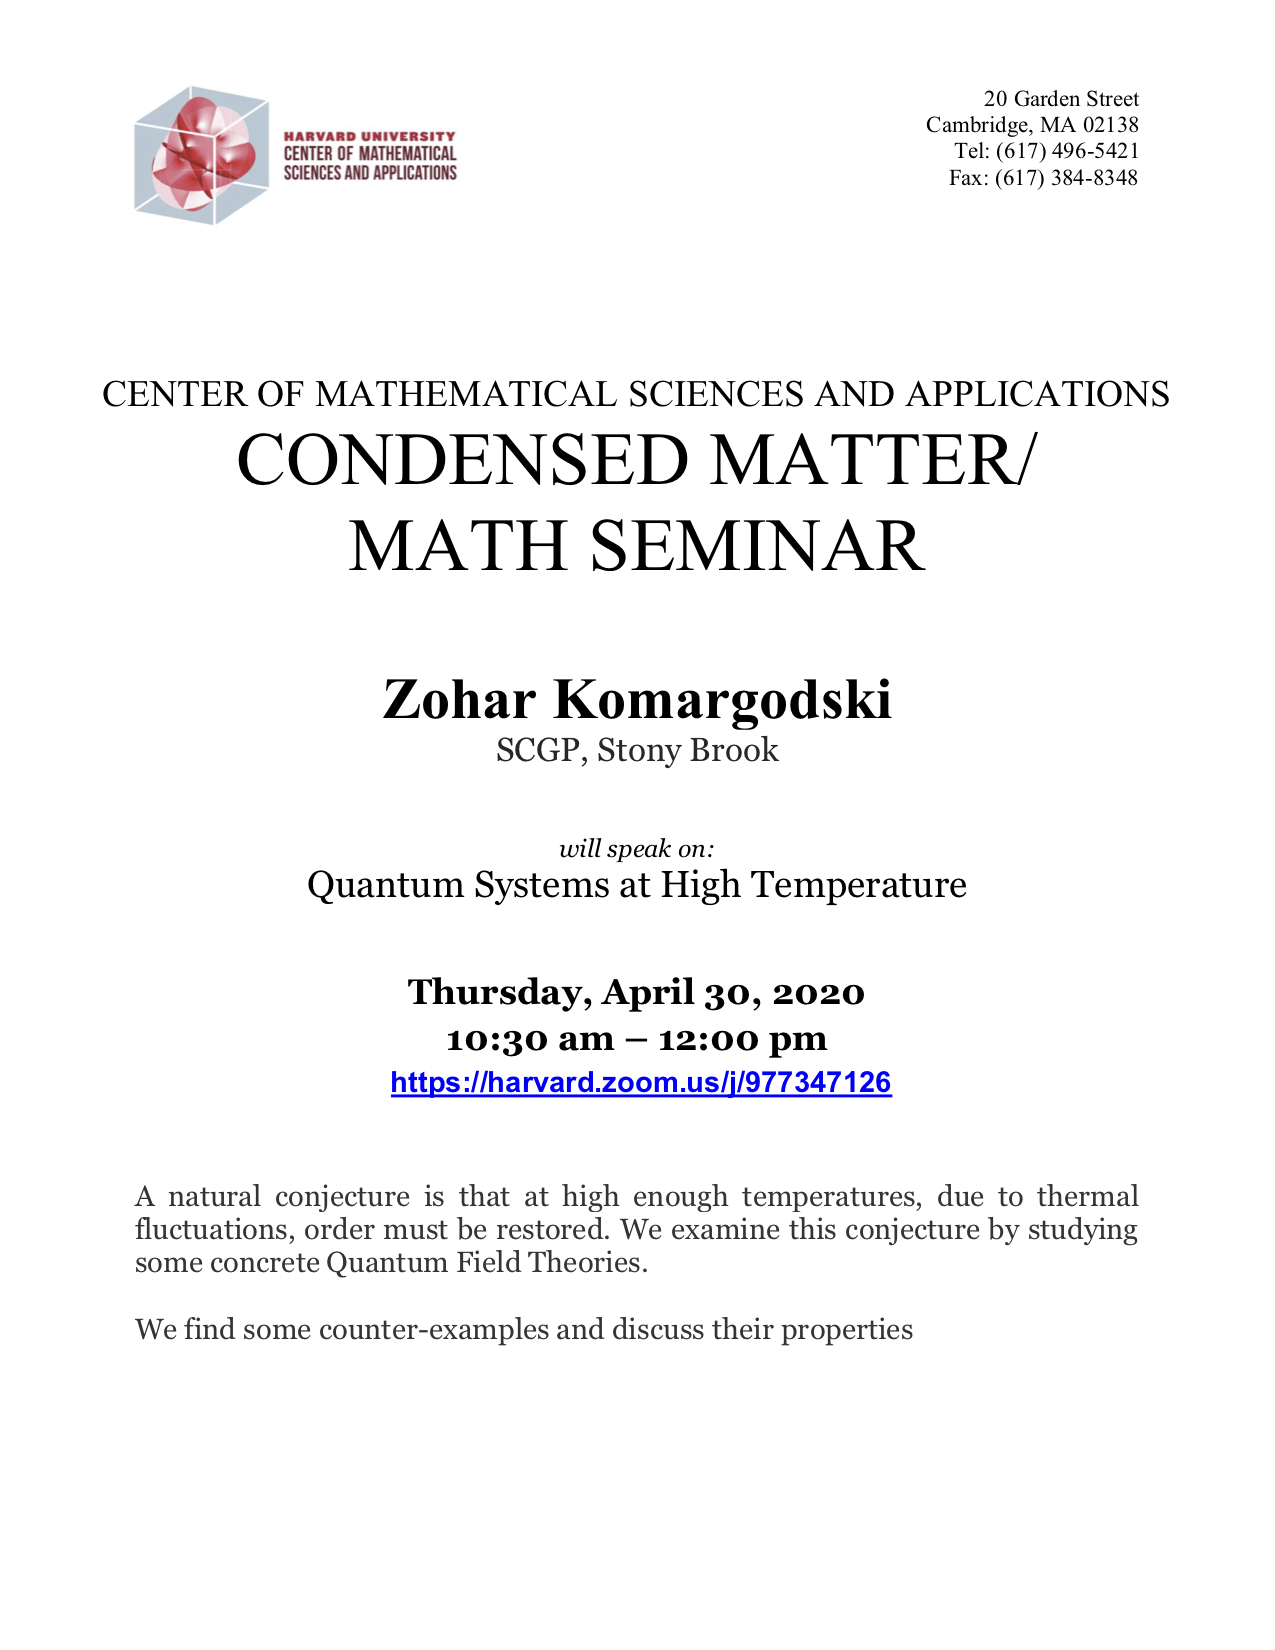 CMSA-Condensed-Matter_Math-Seminar-04.30.20-1